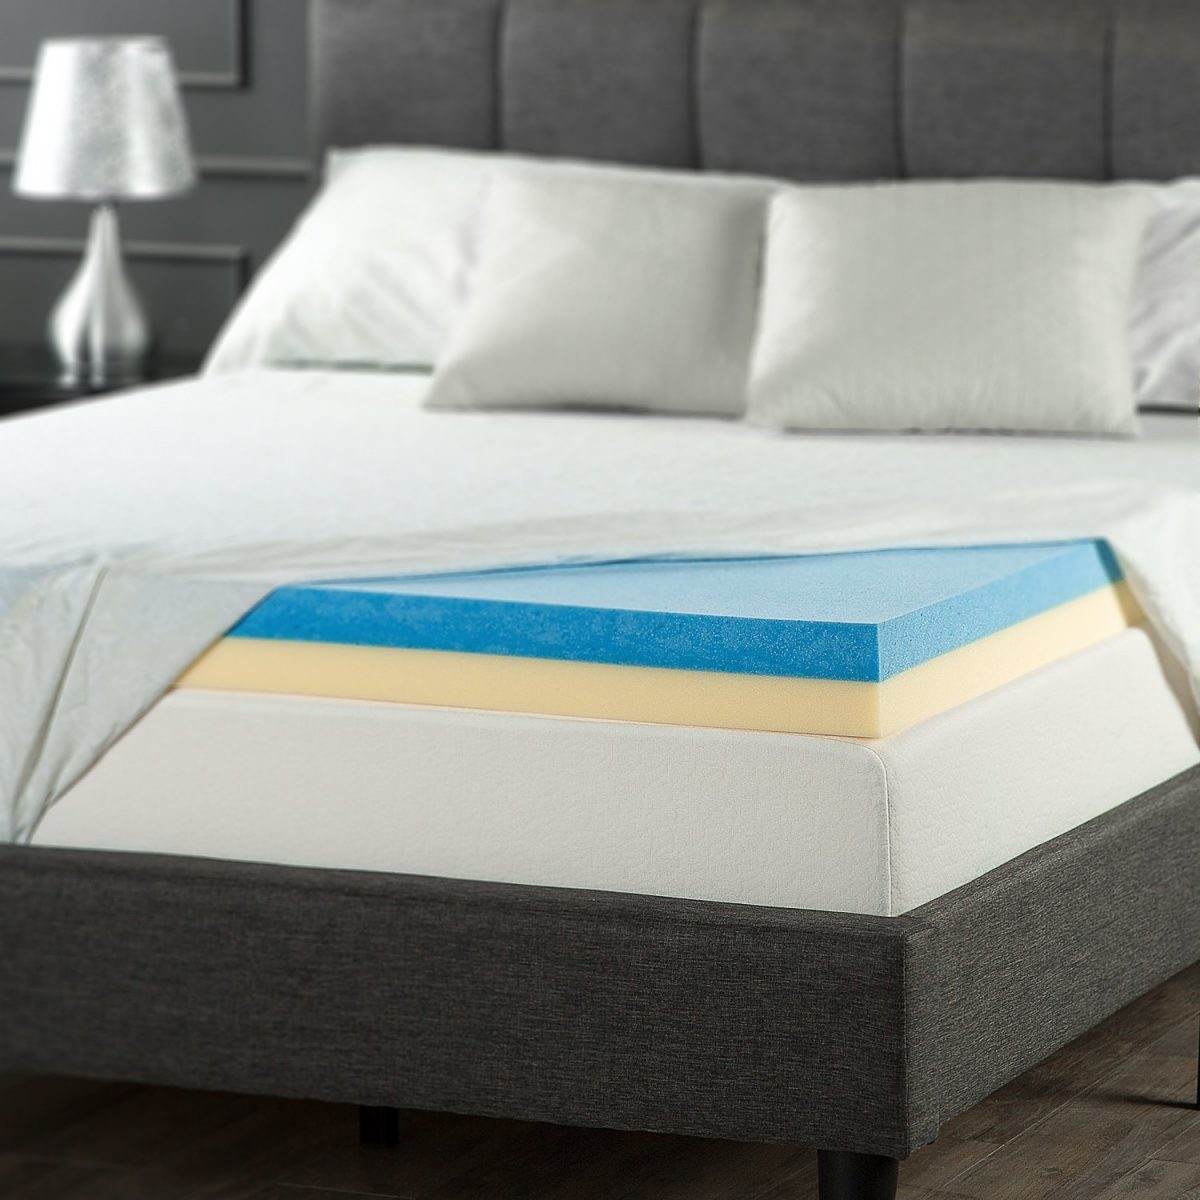 lux 8-inch plush cooling memory foam mattress